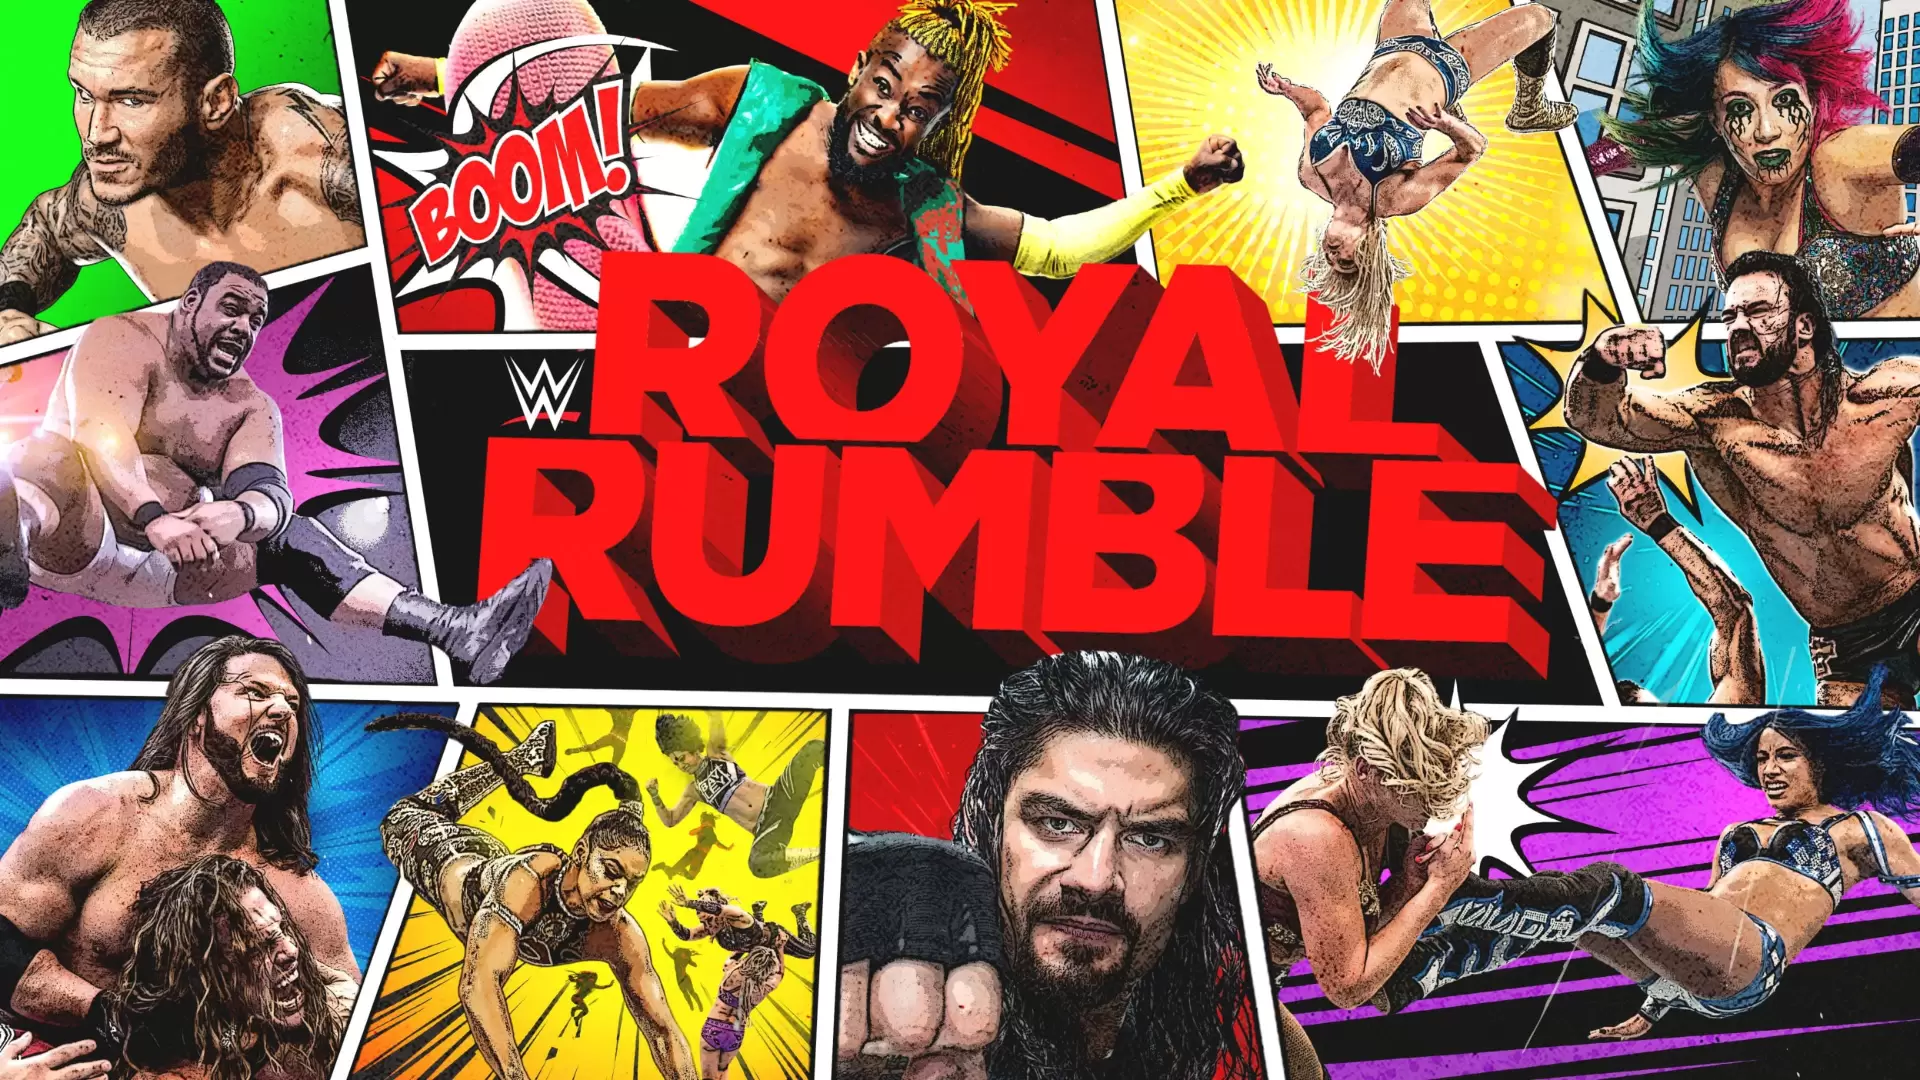 دانلود فیلم WWE: Royal Rumble 2021 (رویال رامبل)